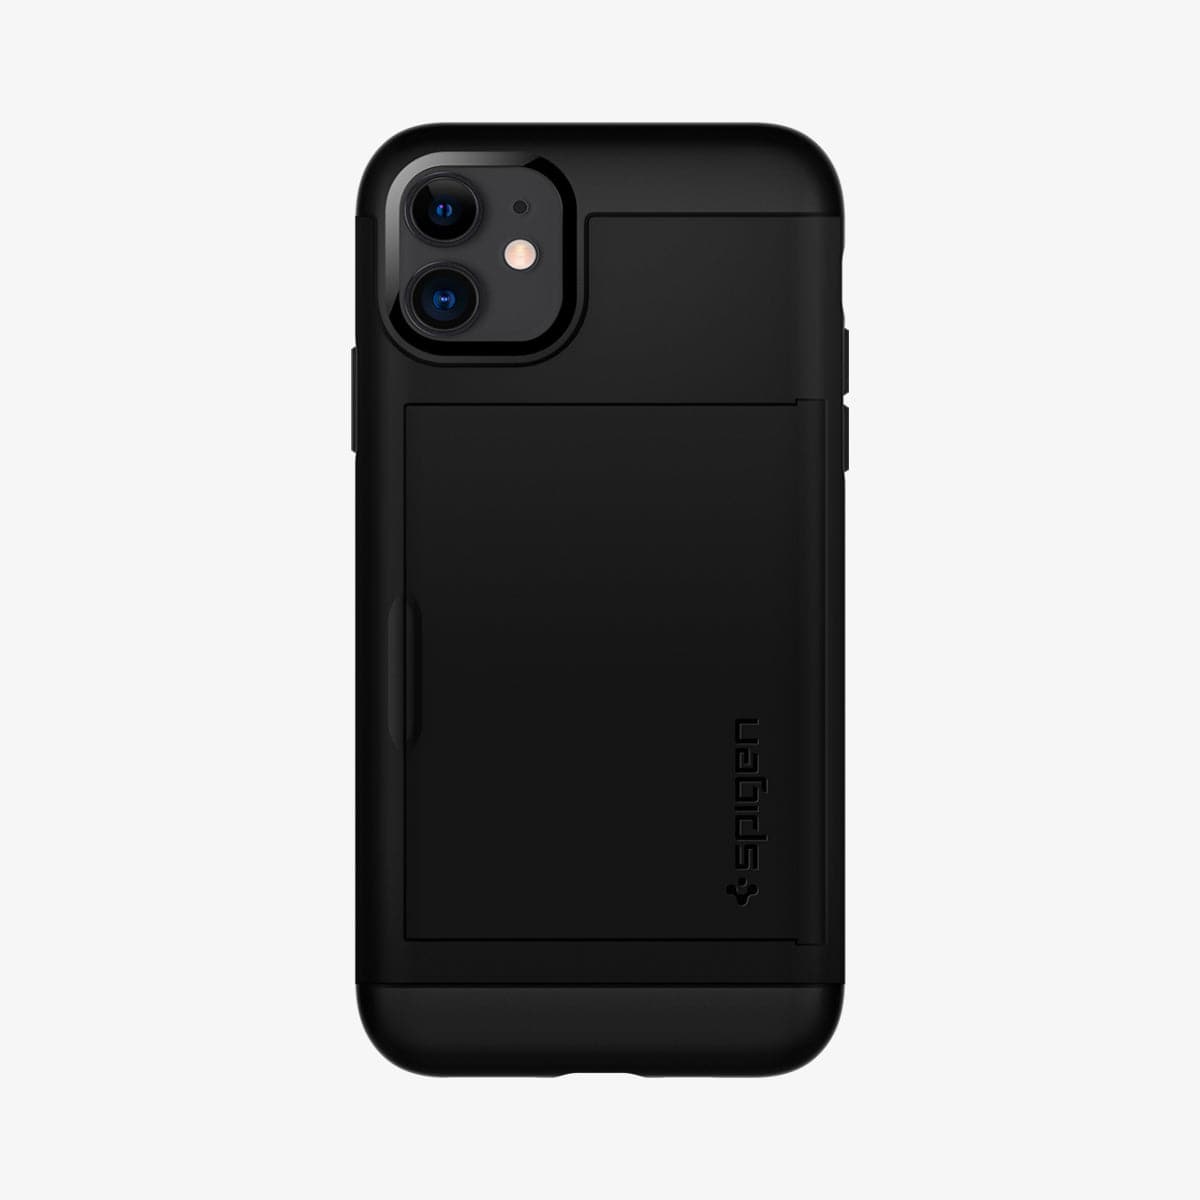 076CS27435 - iPhone 11 Case Slim Armor CS in black showing the back